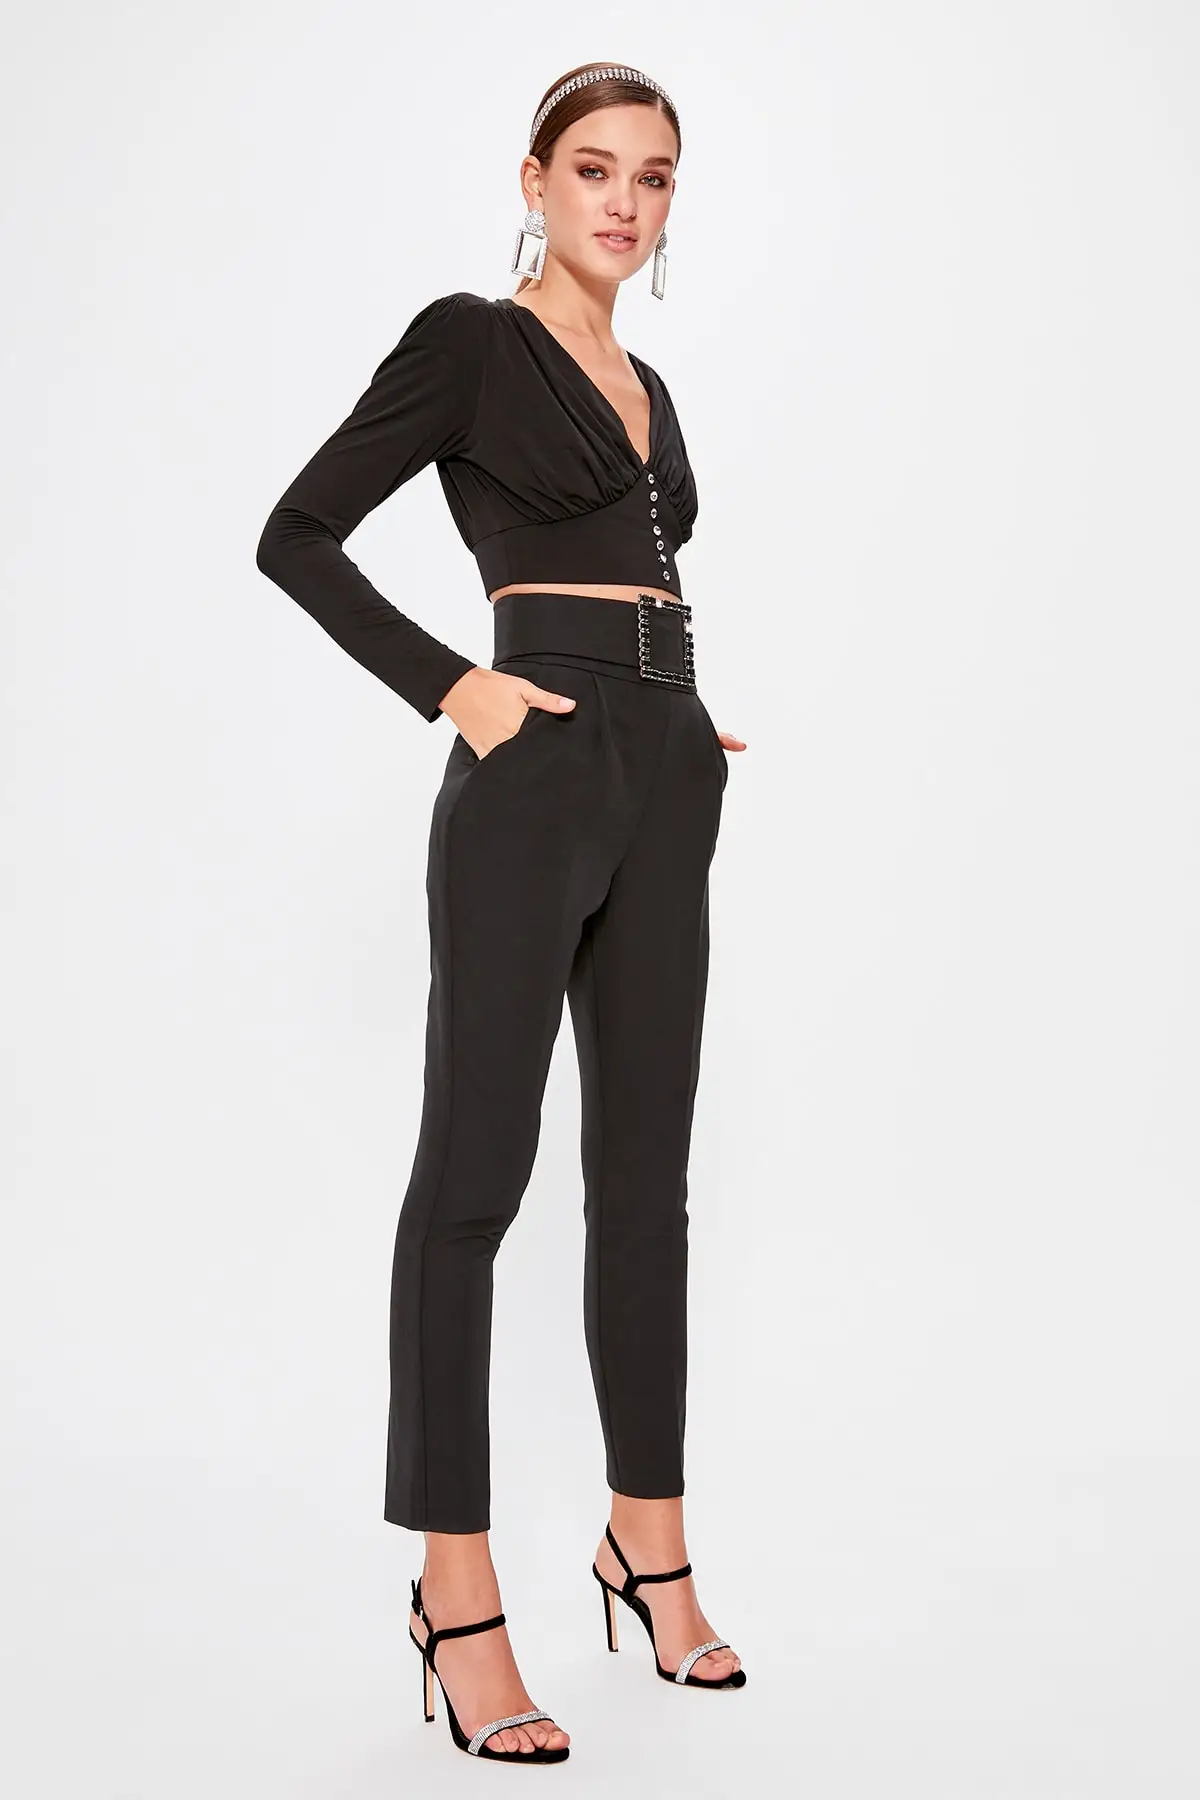 Trendyol брюки с арочными вставками черного цвета TPRAW20PL0168 от AliExpress RU&CIS NEW